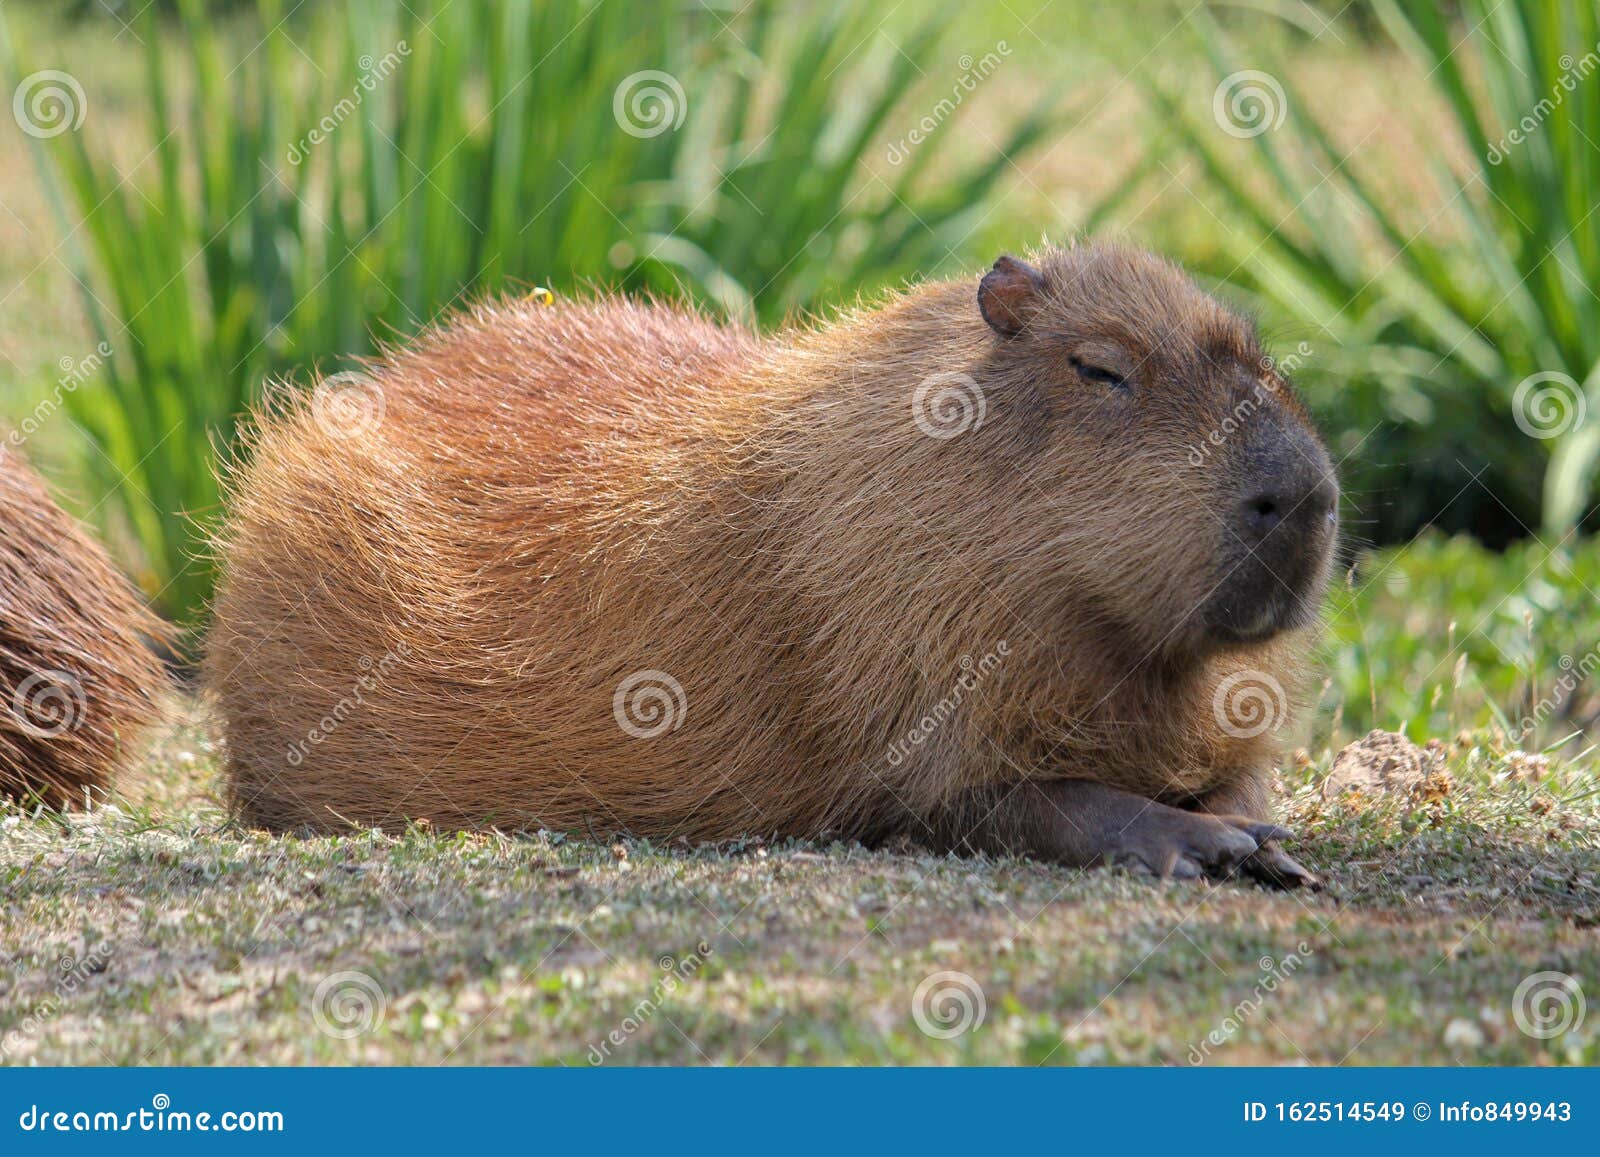 Capybara laying on grass stock image. Image of capybara - 162514549